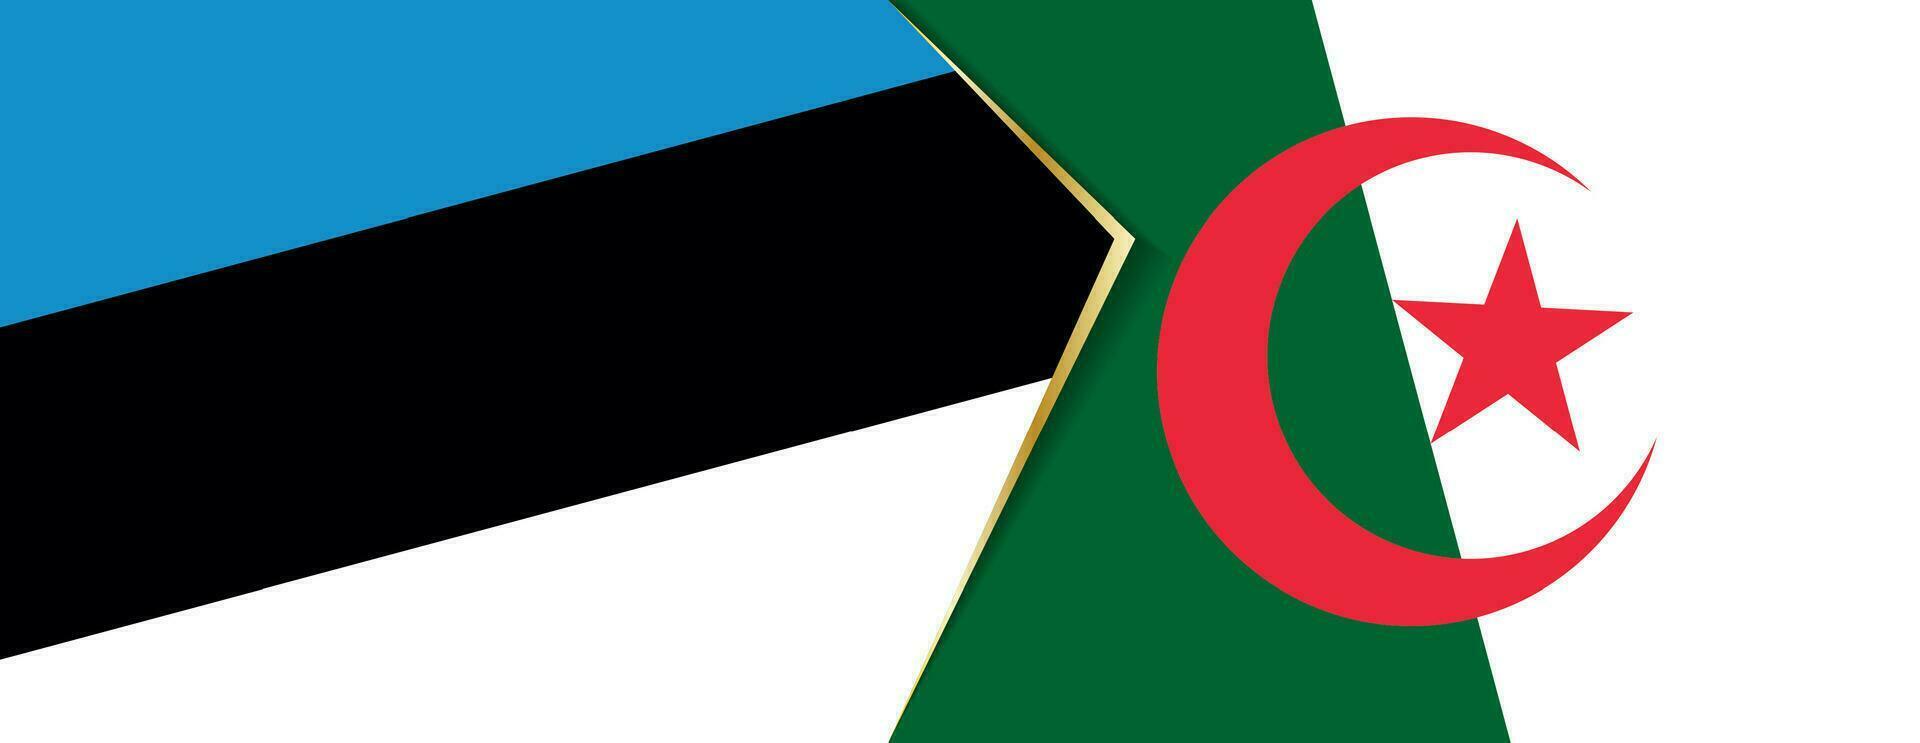 Estonia and Algeria flags, two vector flags.